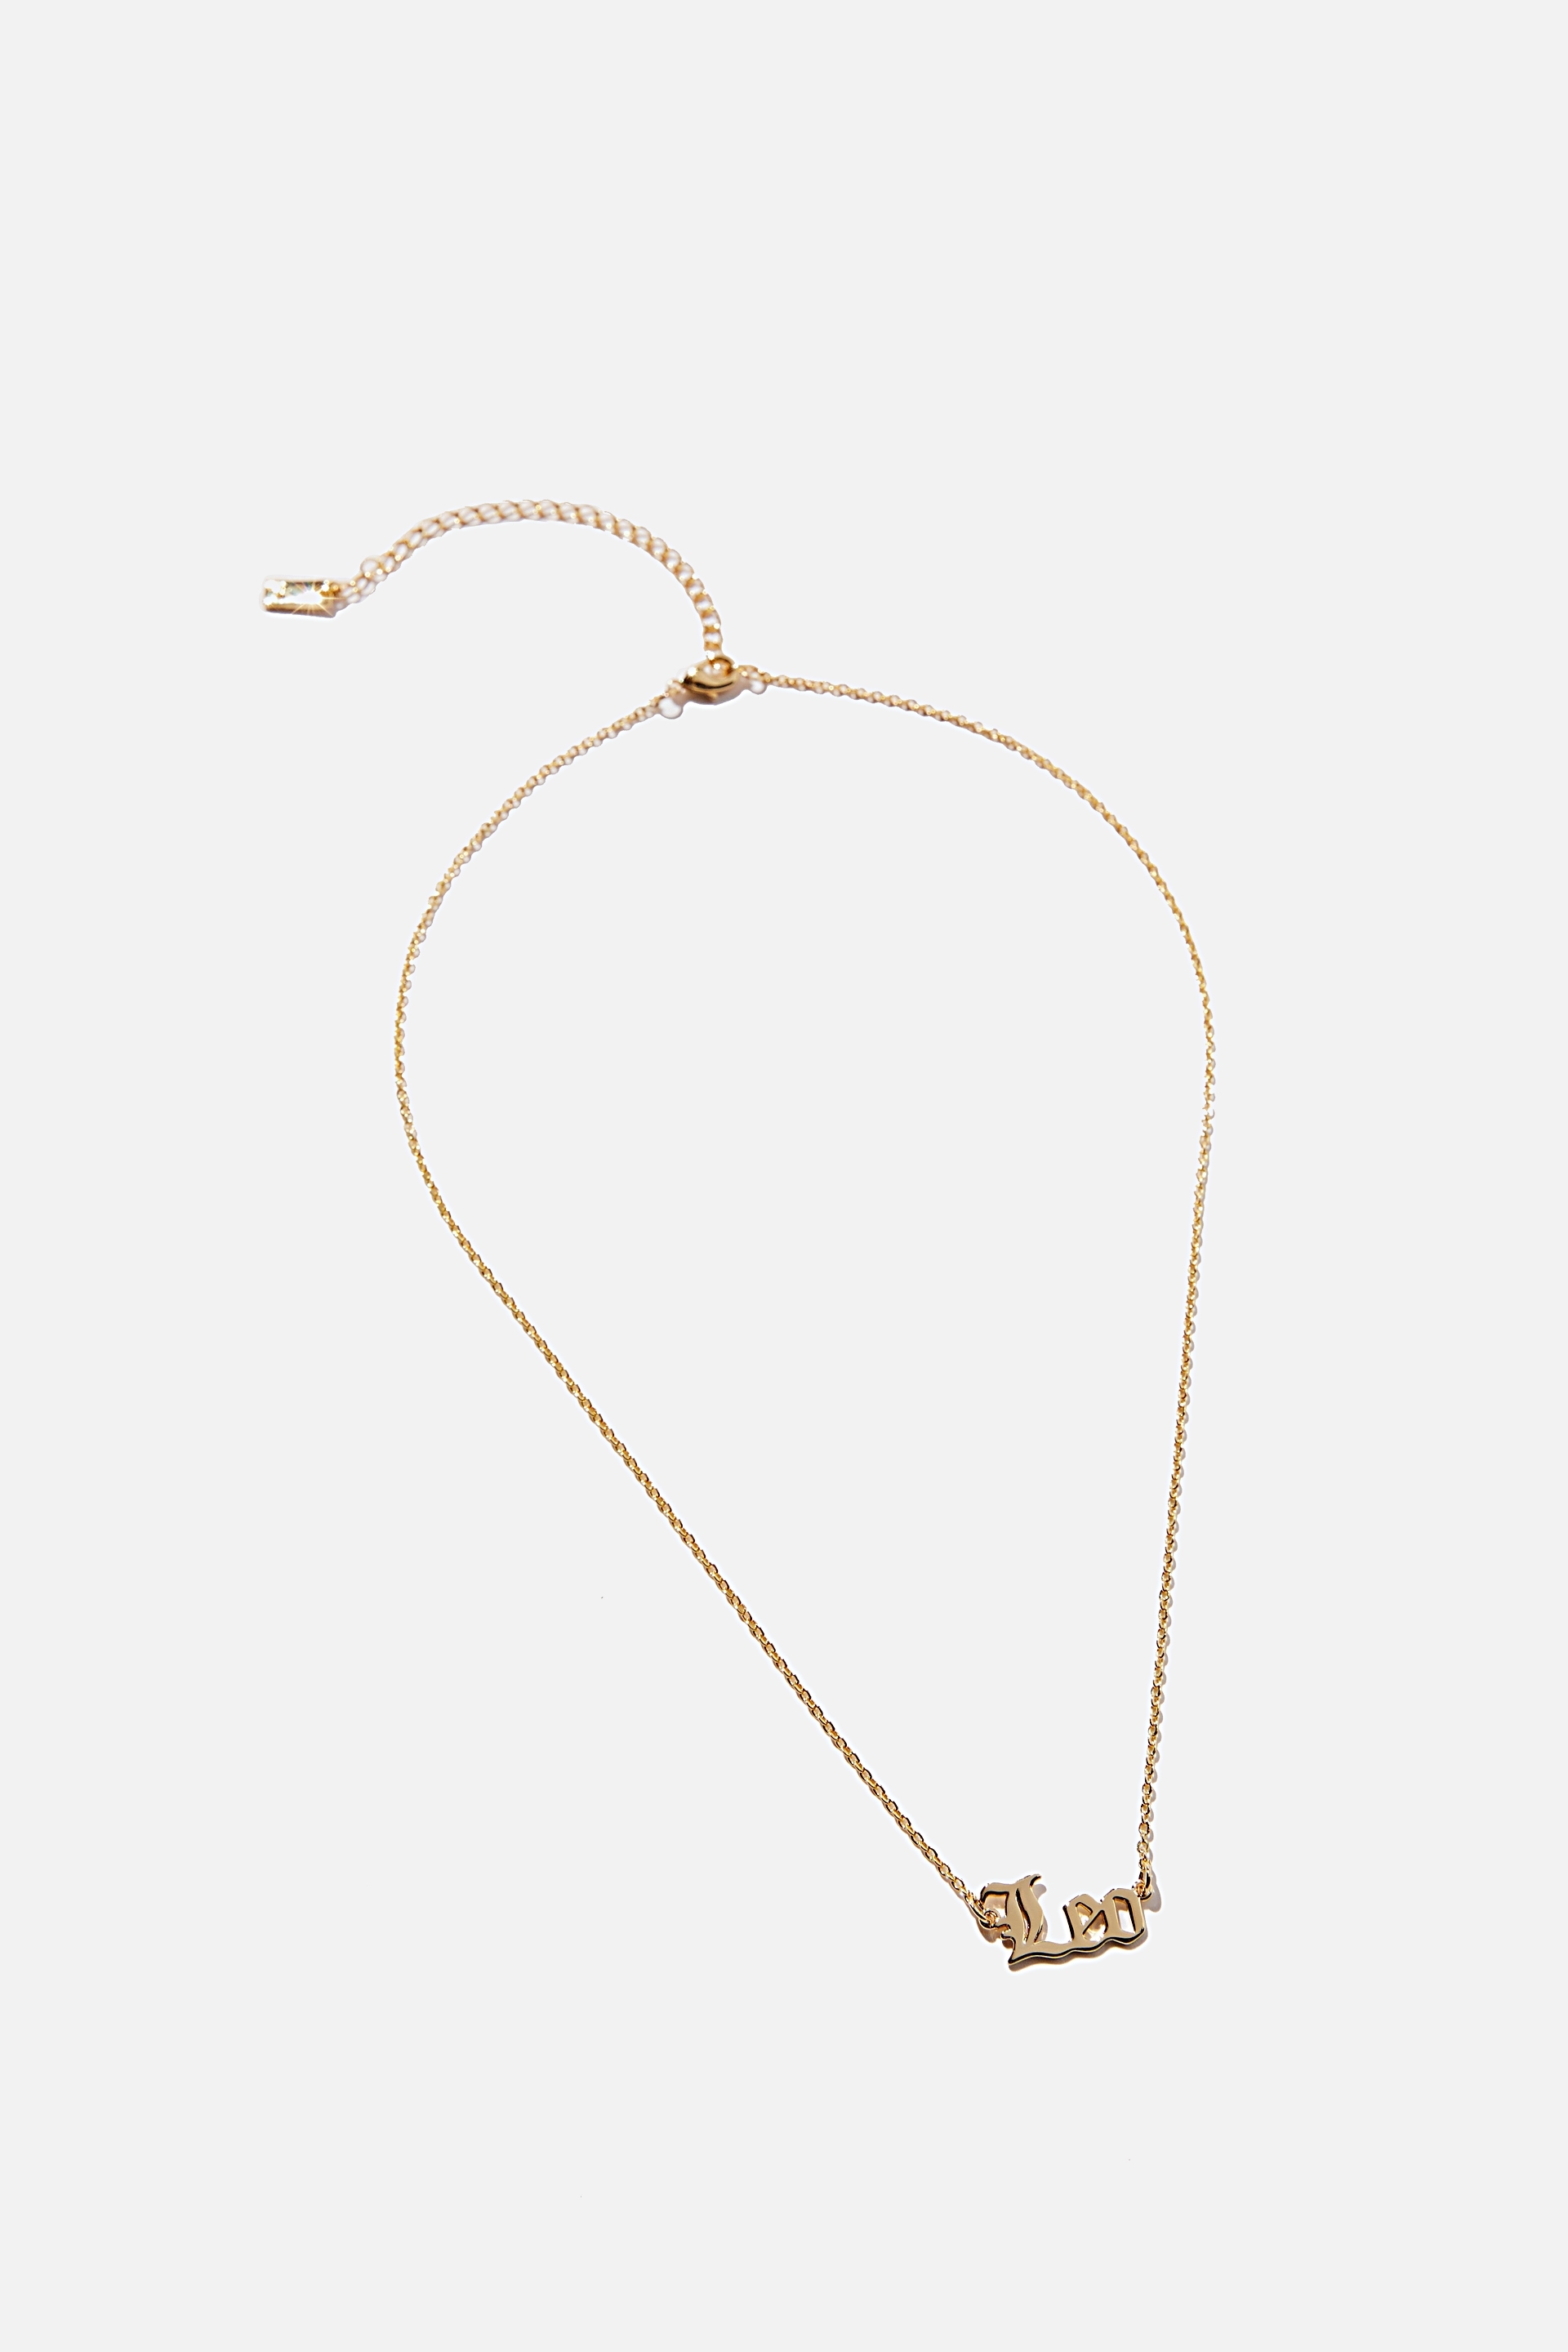 Rubi - Premium Pendant Necklace - Gold plated leo